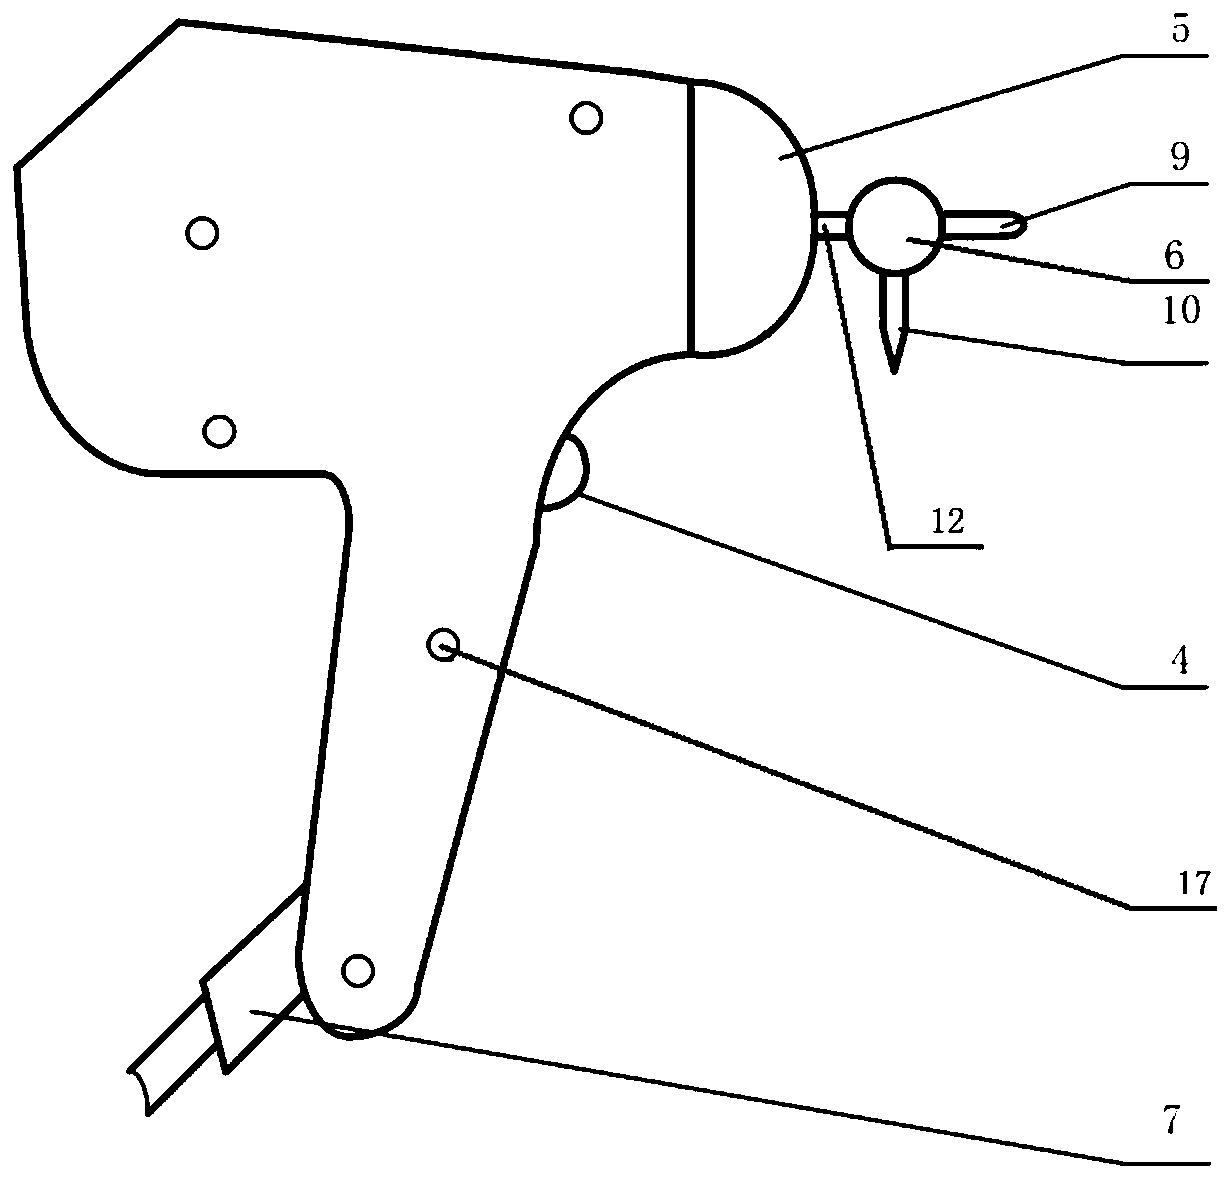 Electrostatic gun with integrated gun head